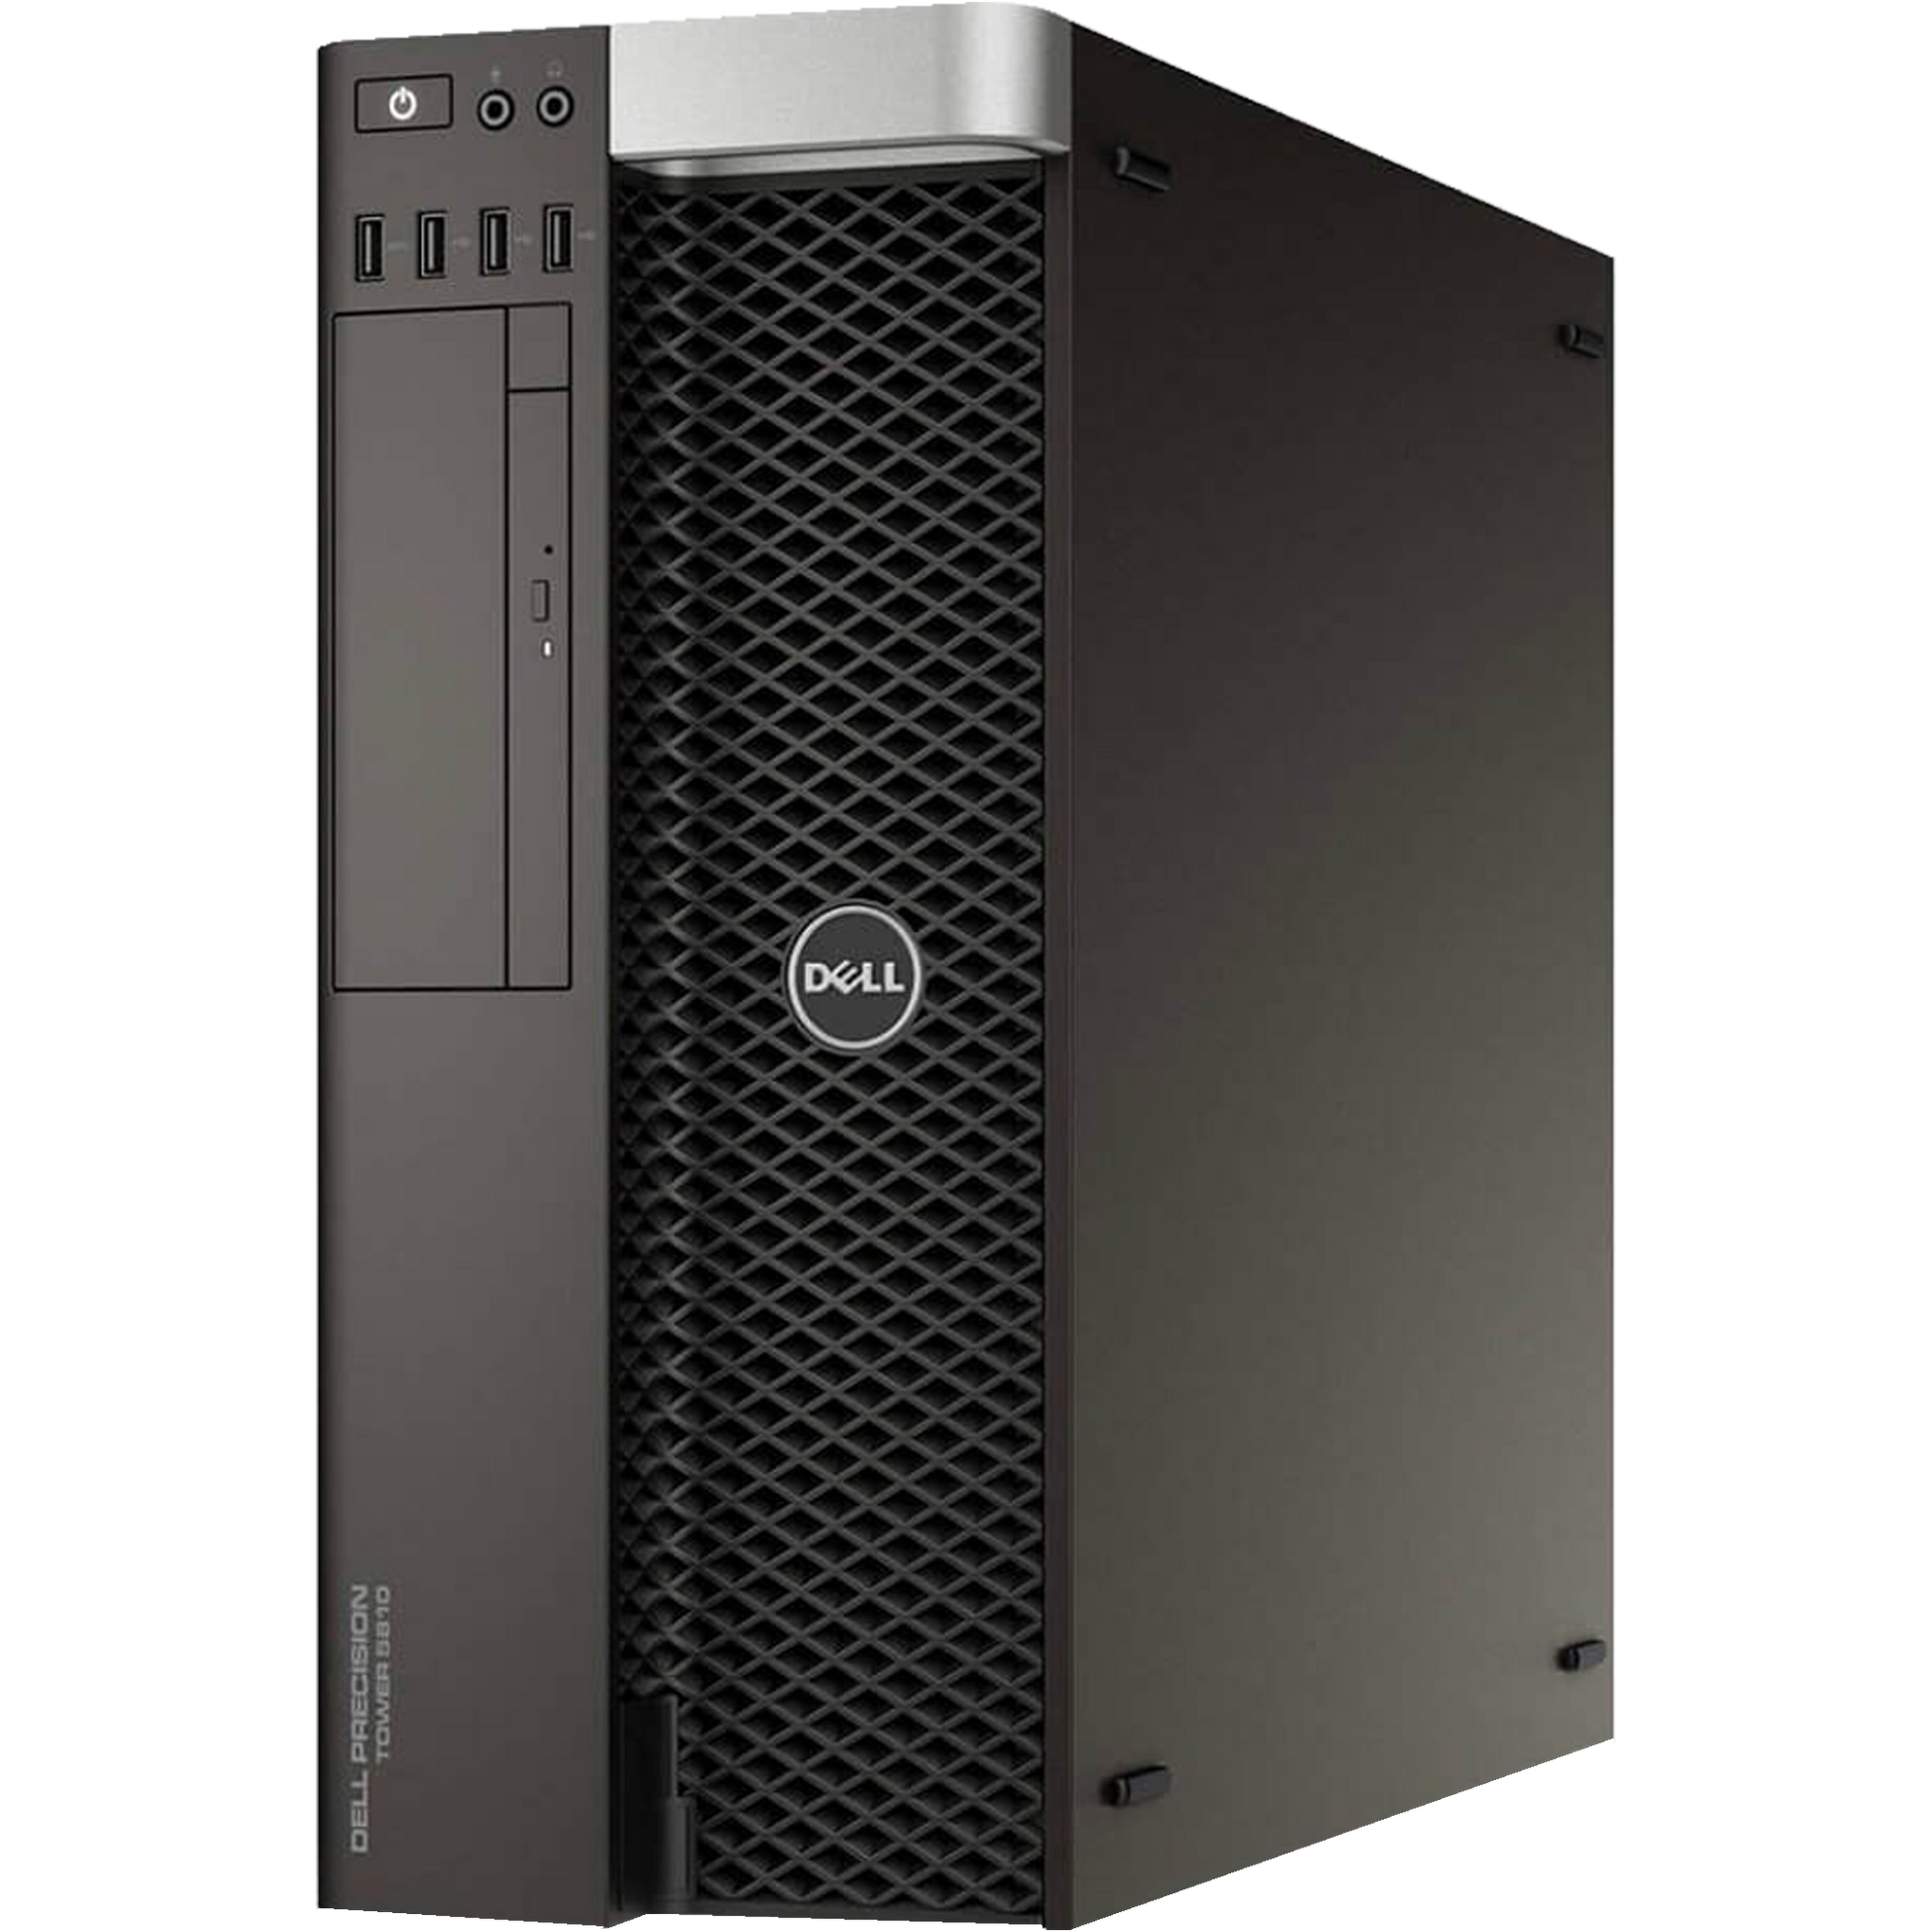 Dell Precision T5810 Intel Xeon Workstation PC with 16GB Ram + 512GB SSD Desktop Computers